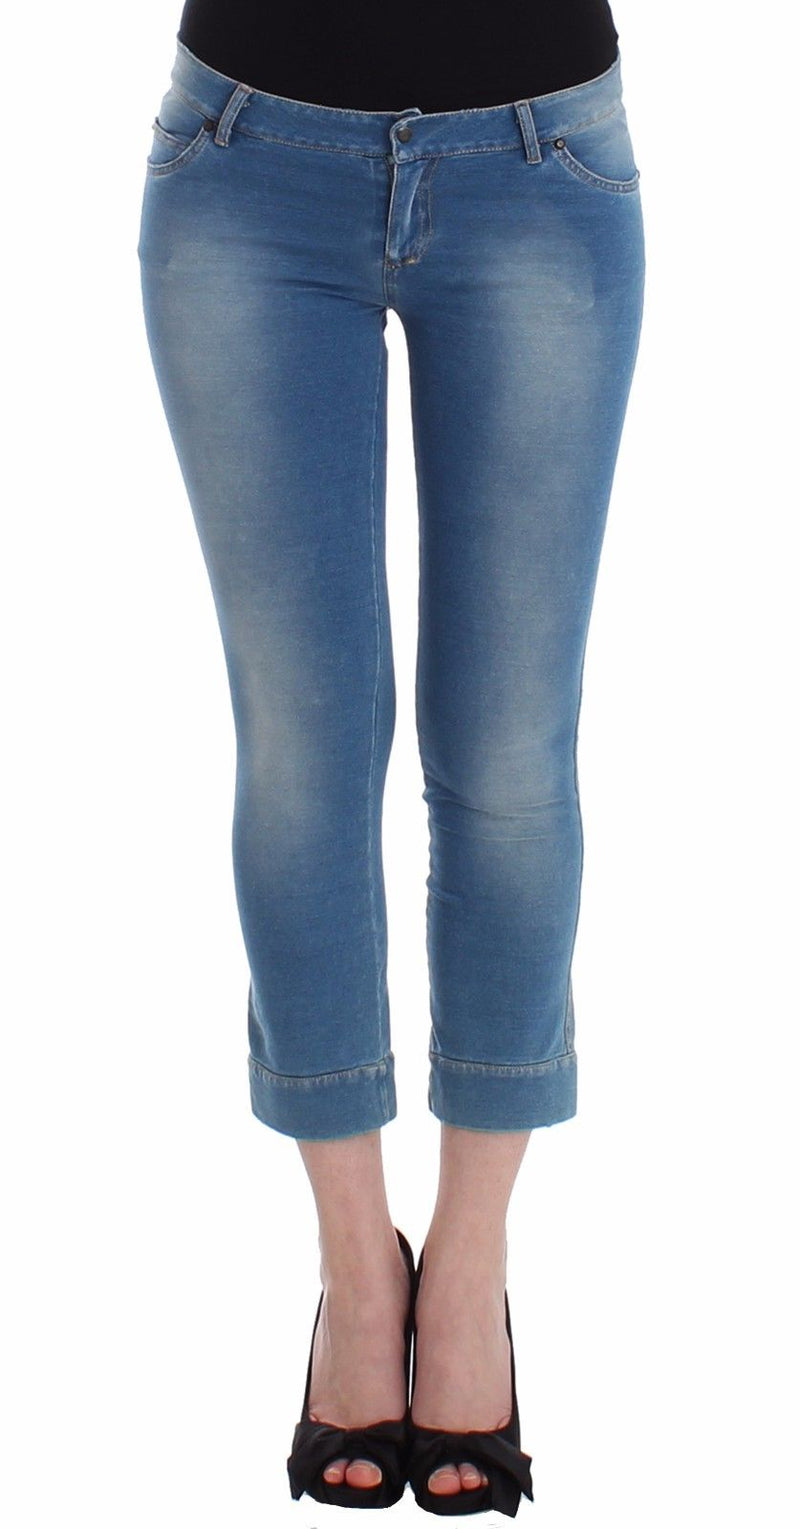 Beachwear Blue Jeans Capri Pants Cropped - Avaz Shop